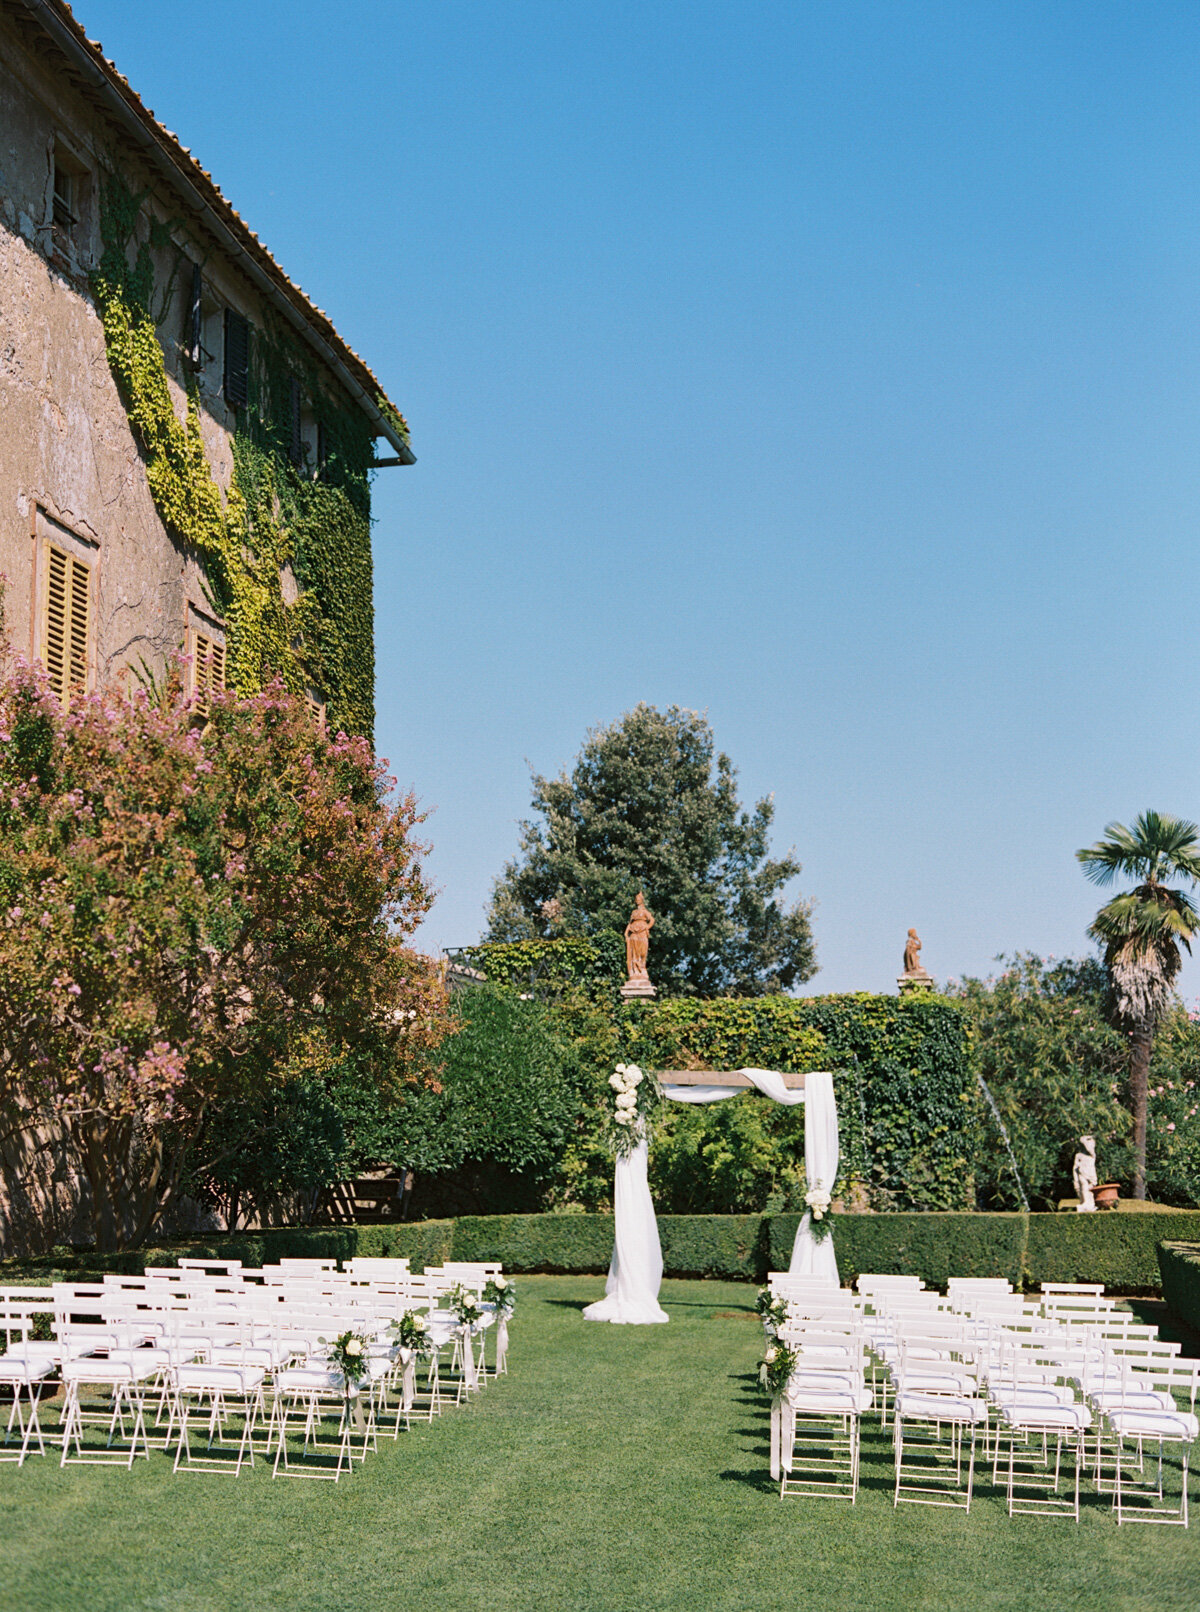 Borgo-Stommenano-Florence-Tuscany-Katie-Grant-destination-wedding (16 of 47).jpg